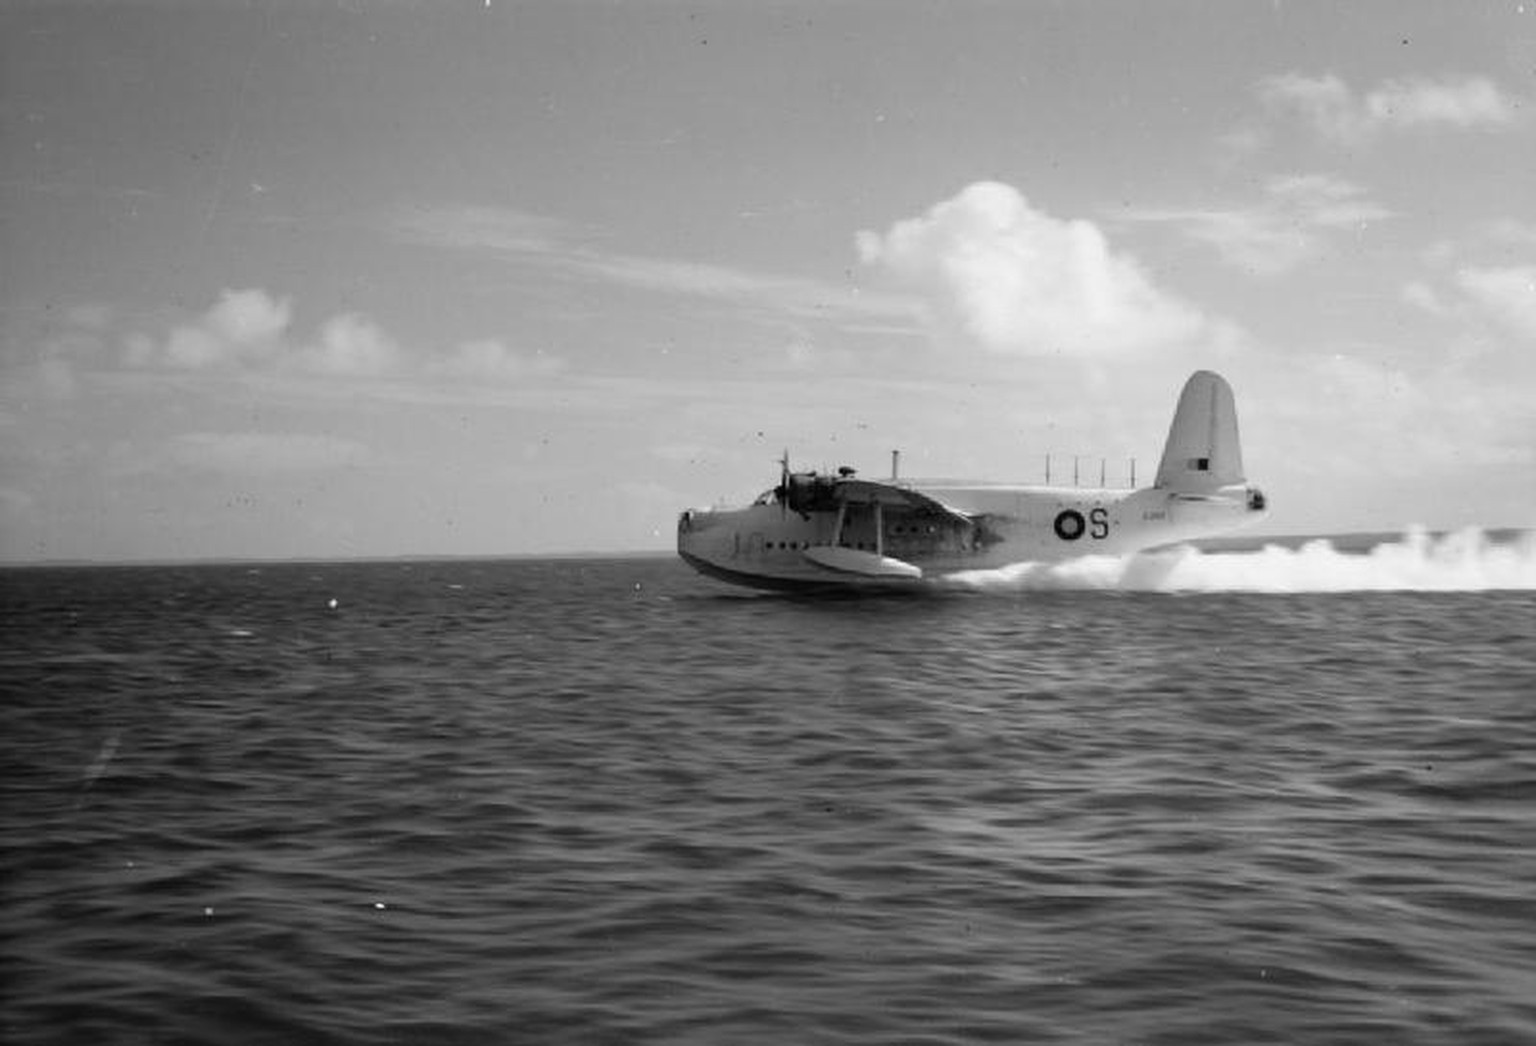 Aircraft of the Royal Air Force 1939-1945- Short S.25 Sunderland.
Sunderland Mark III, EJ143 S, of No. 230 Squadron RAF Detachment, piloted by Flight Lieutenant A W Deller, taking off at Addu Atoll, ...